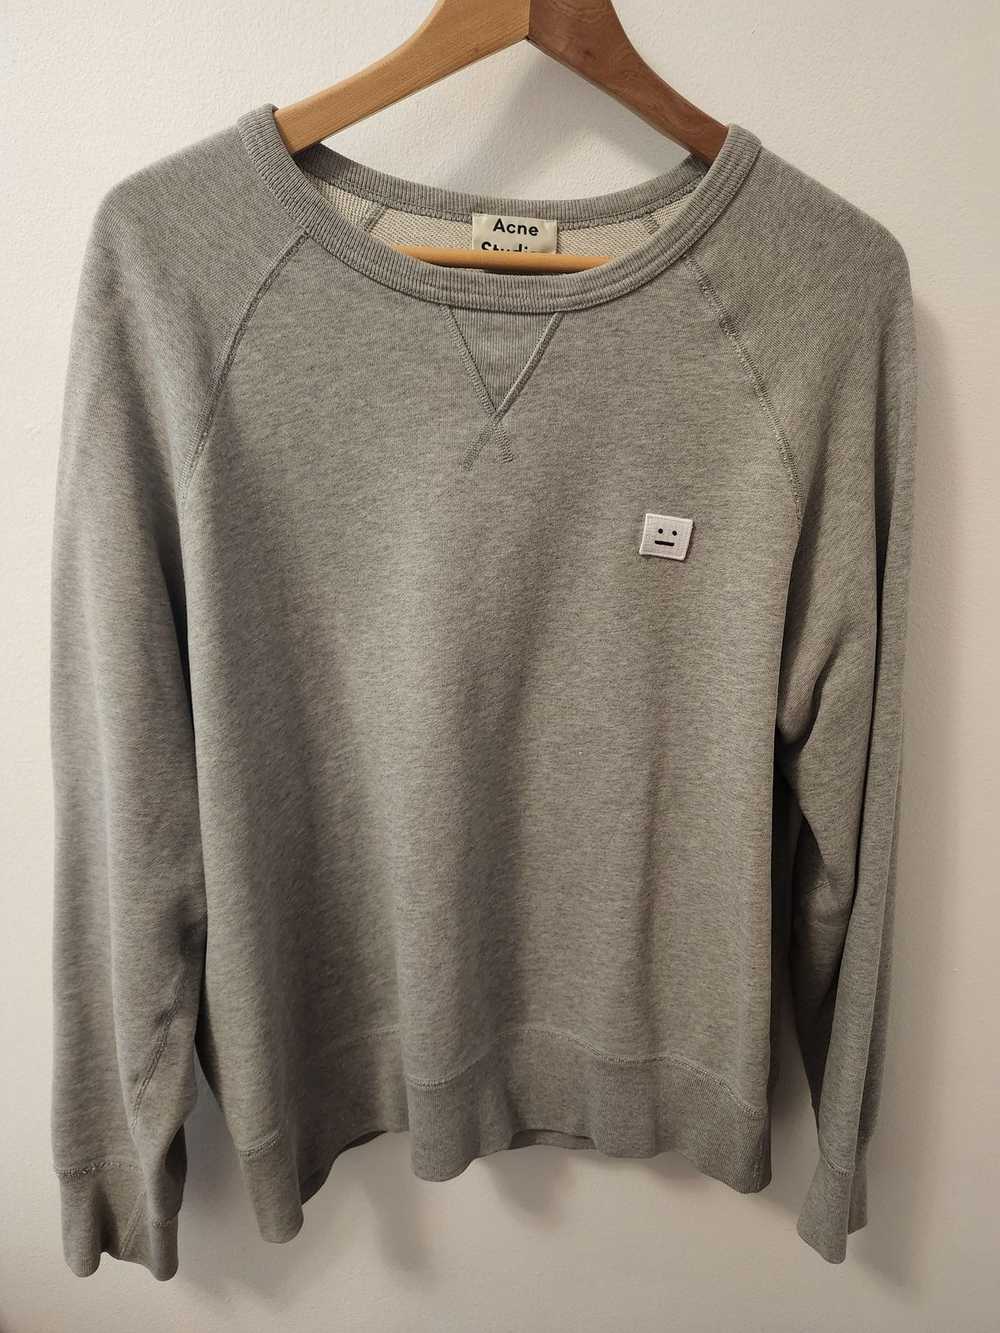 Acne Studios College Face Grey Sweatshirt - image 1